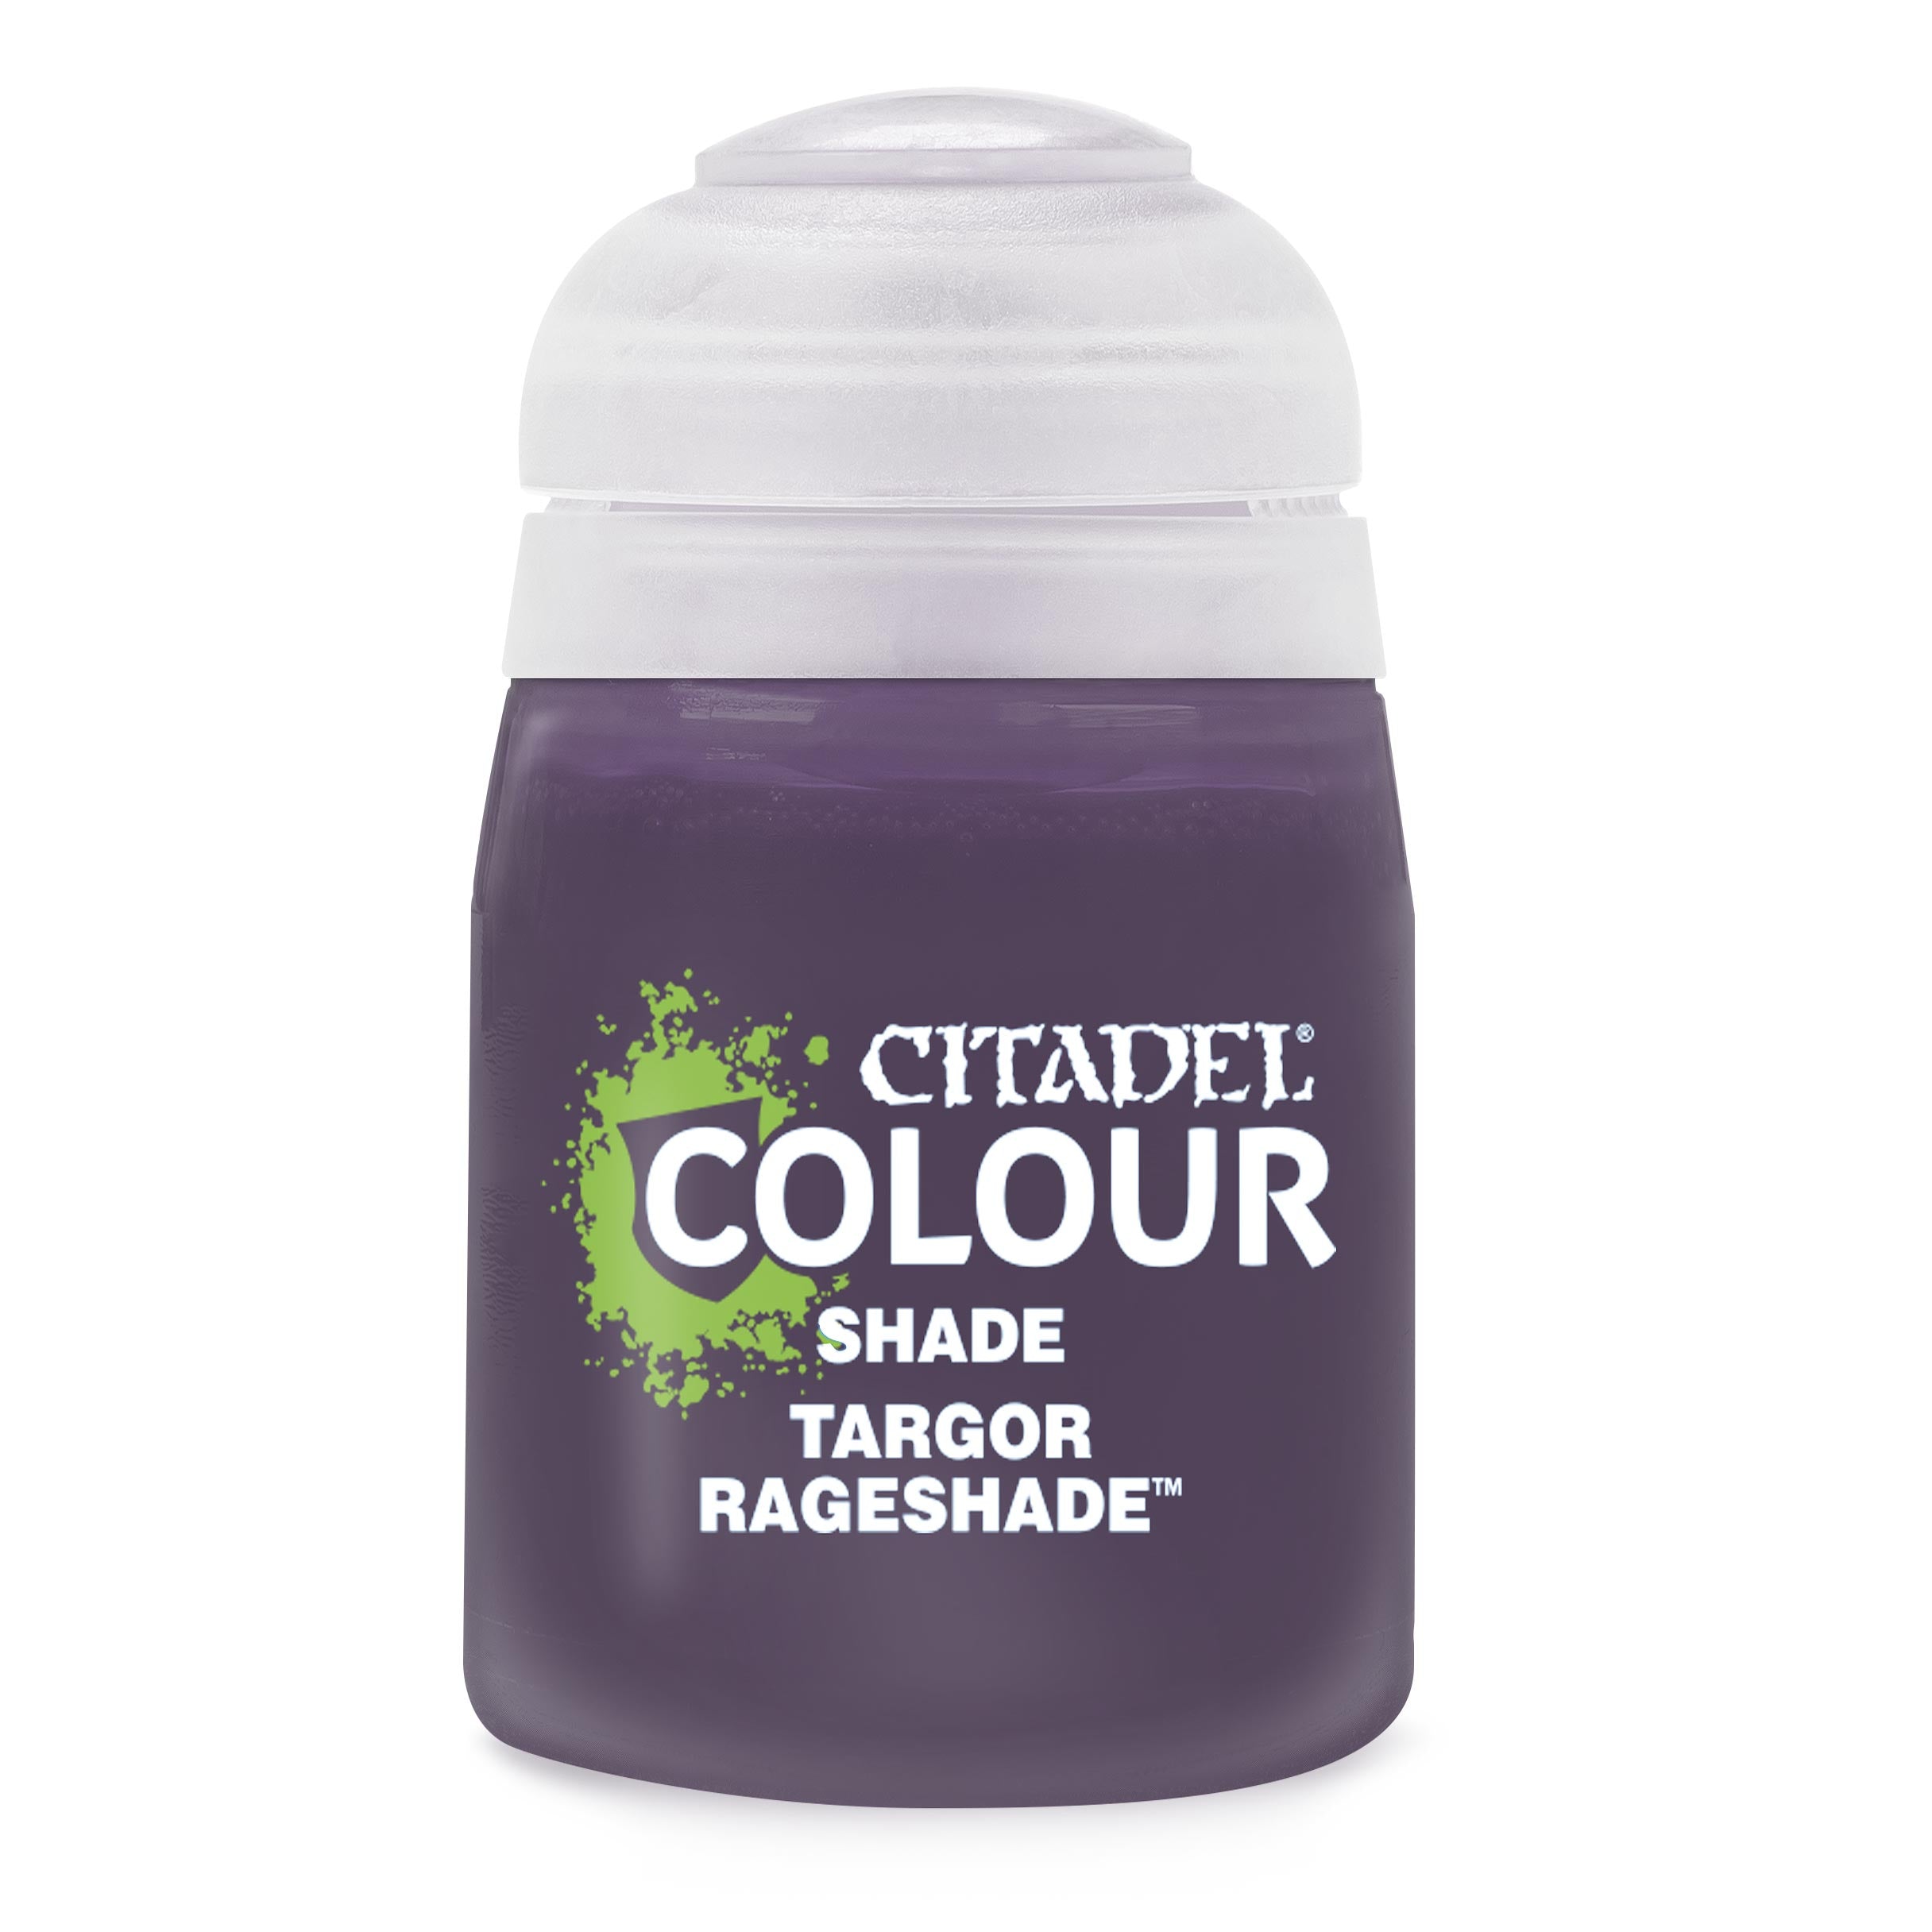 Citadel Colour Shade: Targor Rageshade 18ml